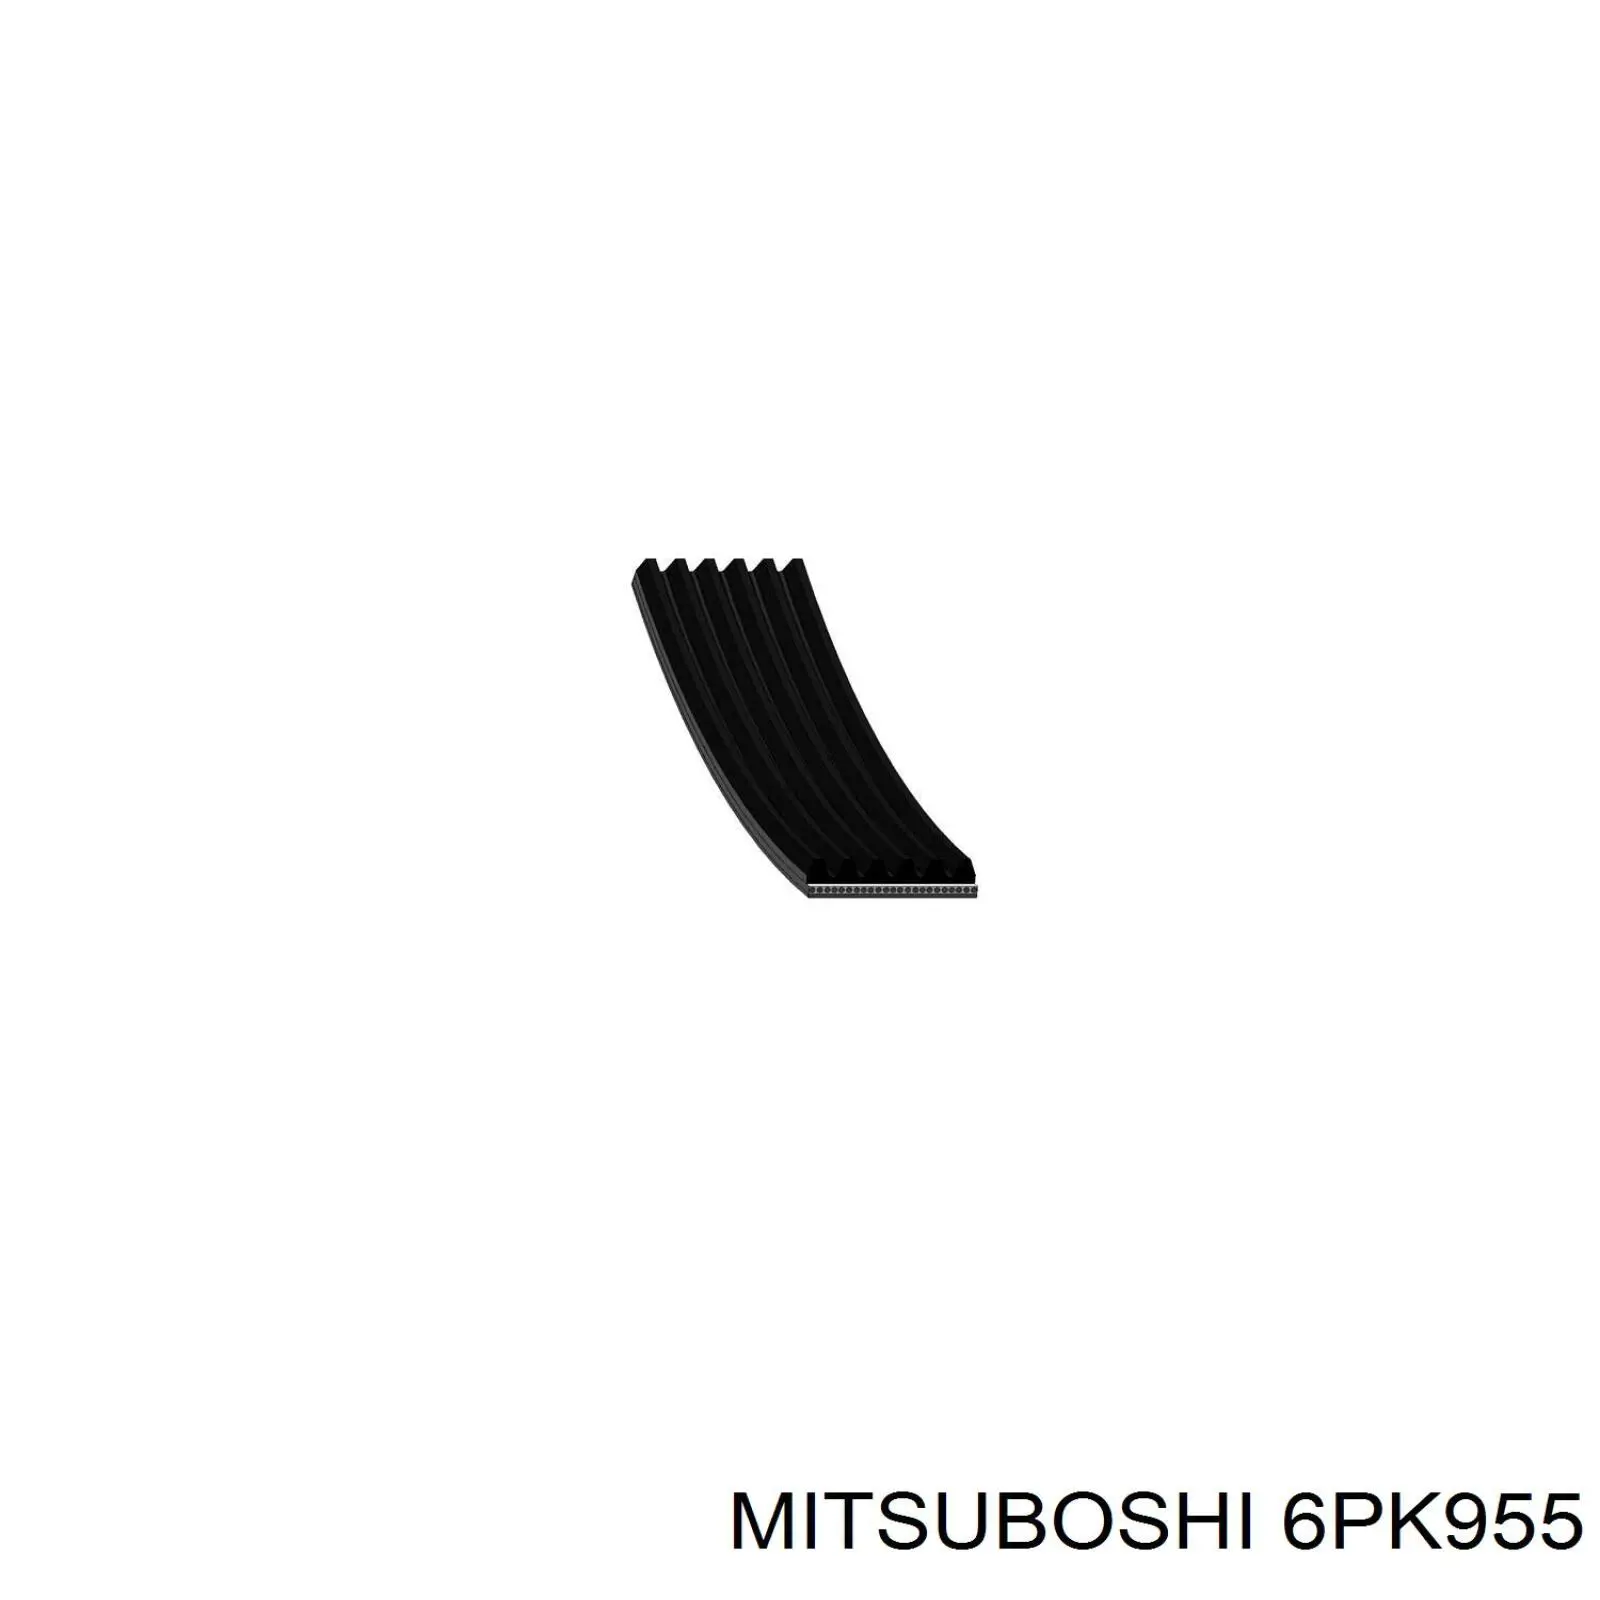 6PK955 Mitsuboshi correa trapezoidal